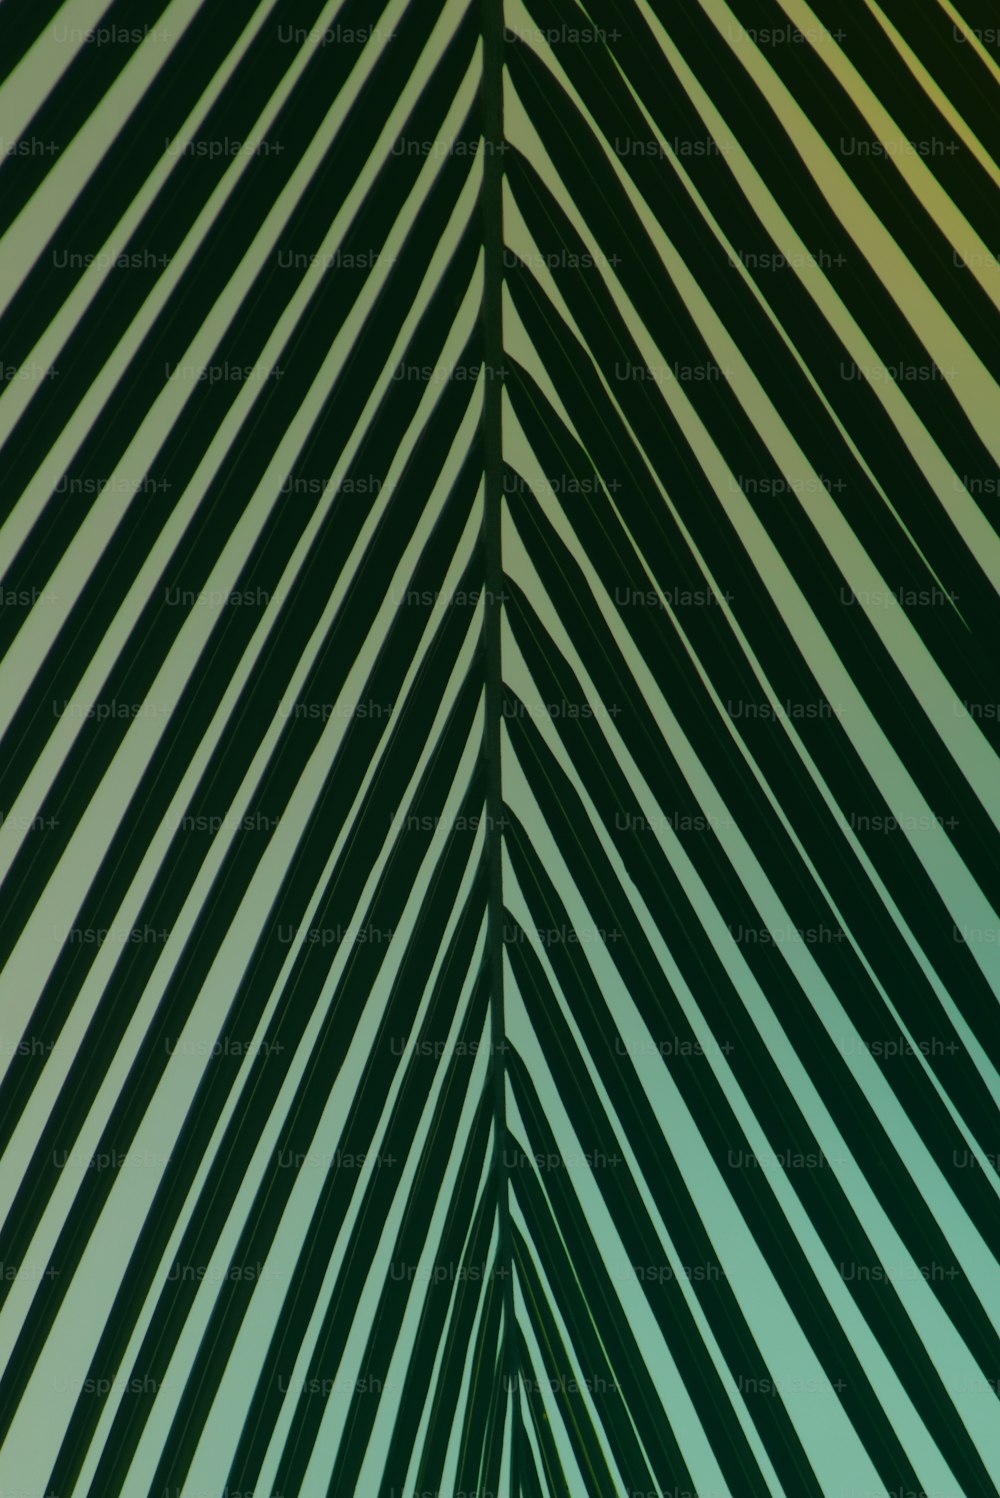 Green aesthetic wallpaper by Aubrey011 - Download on ZEDGE™